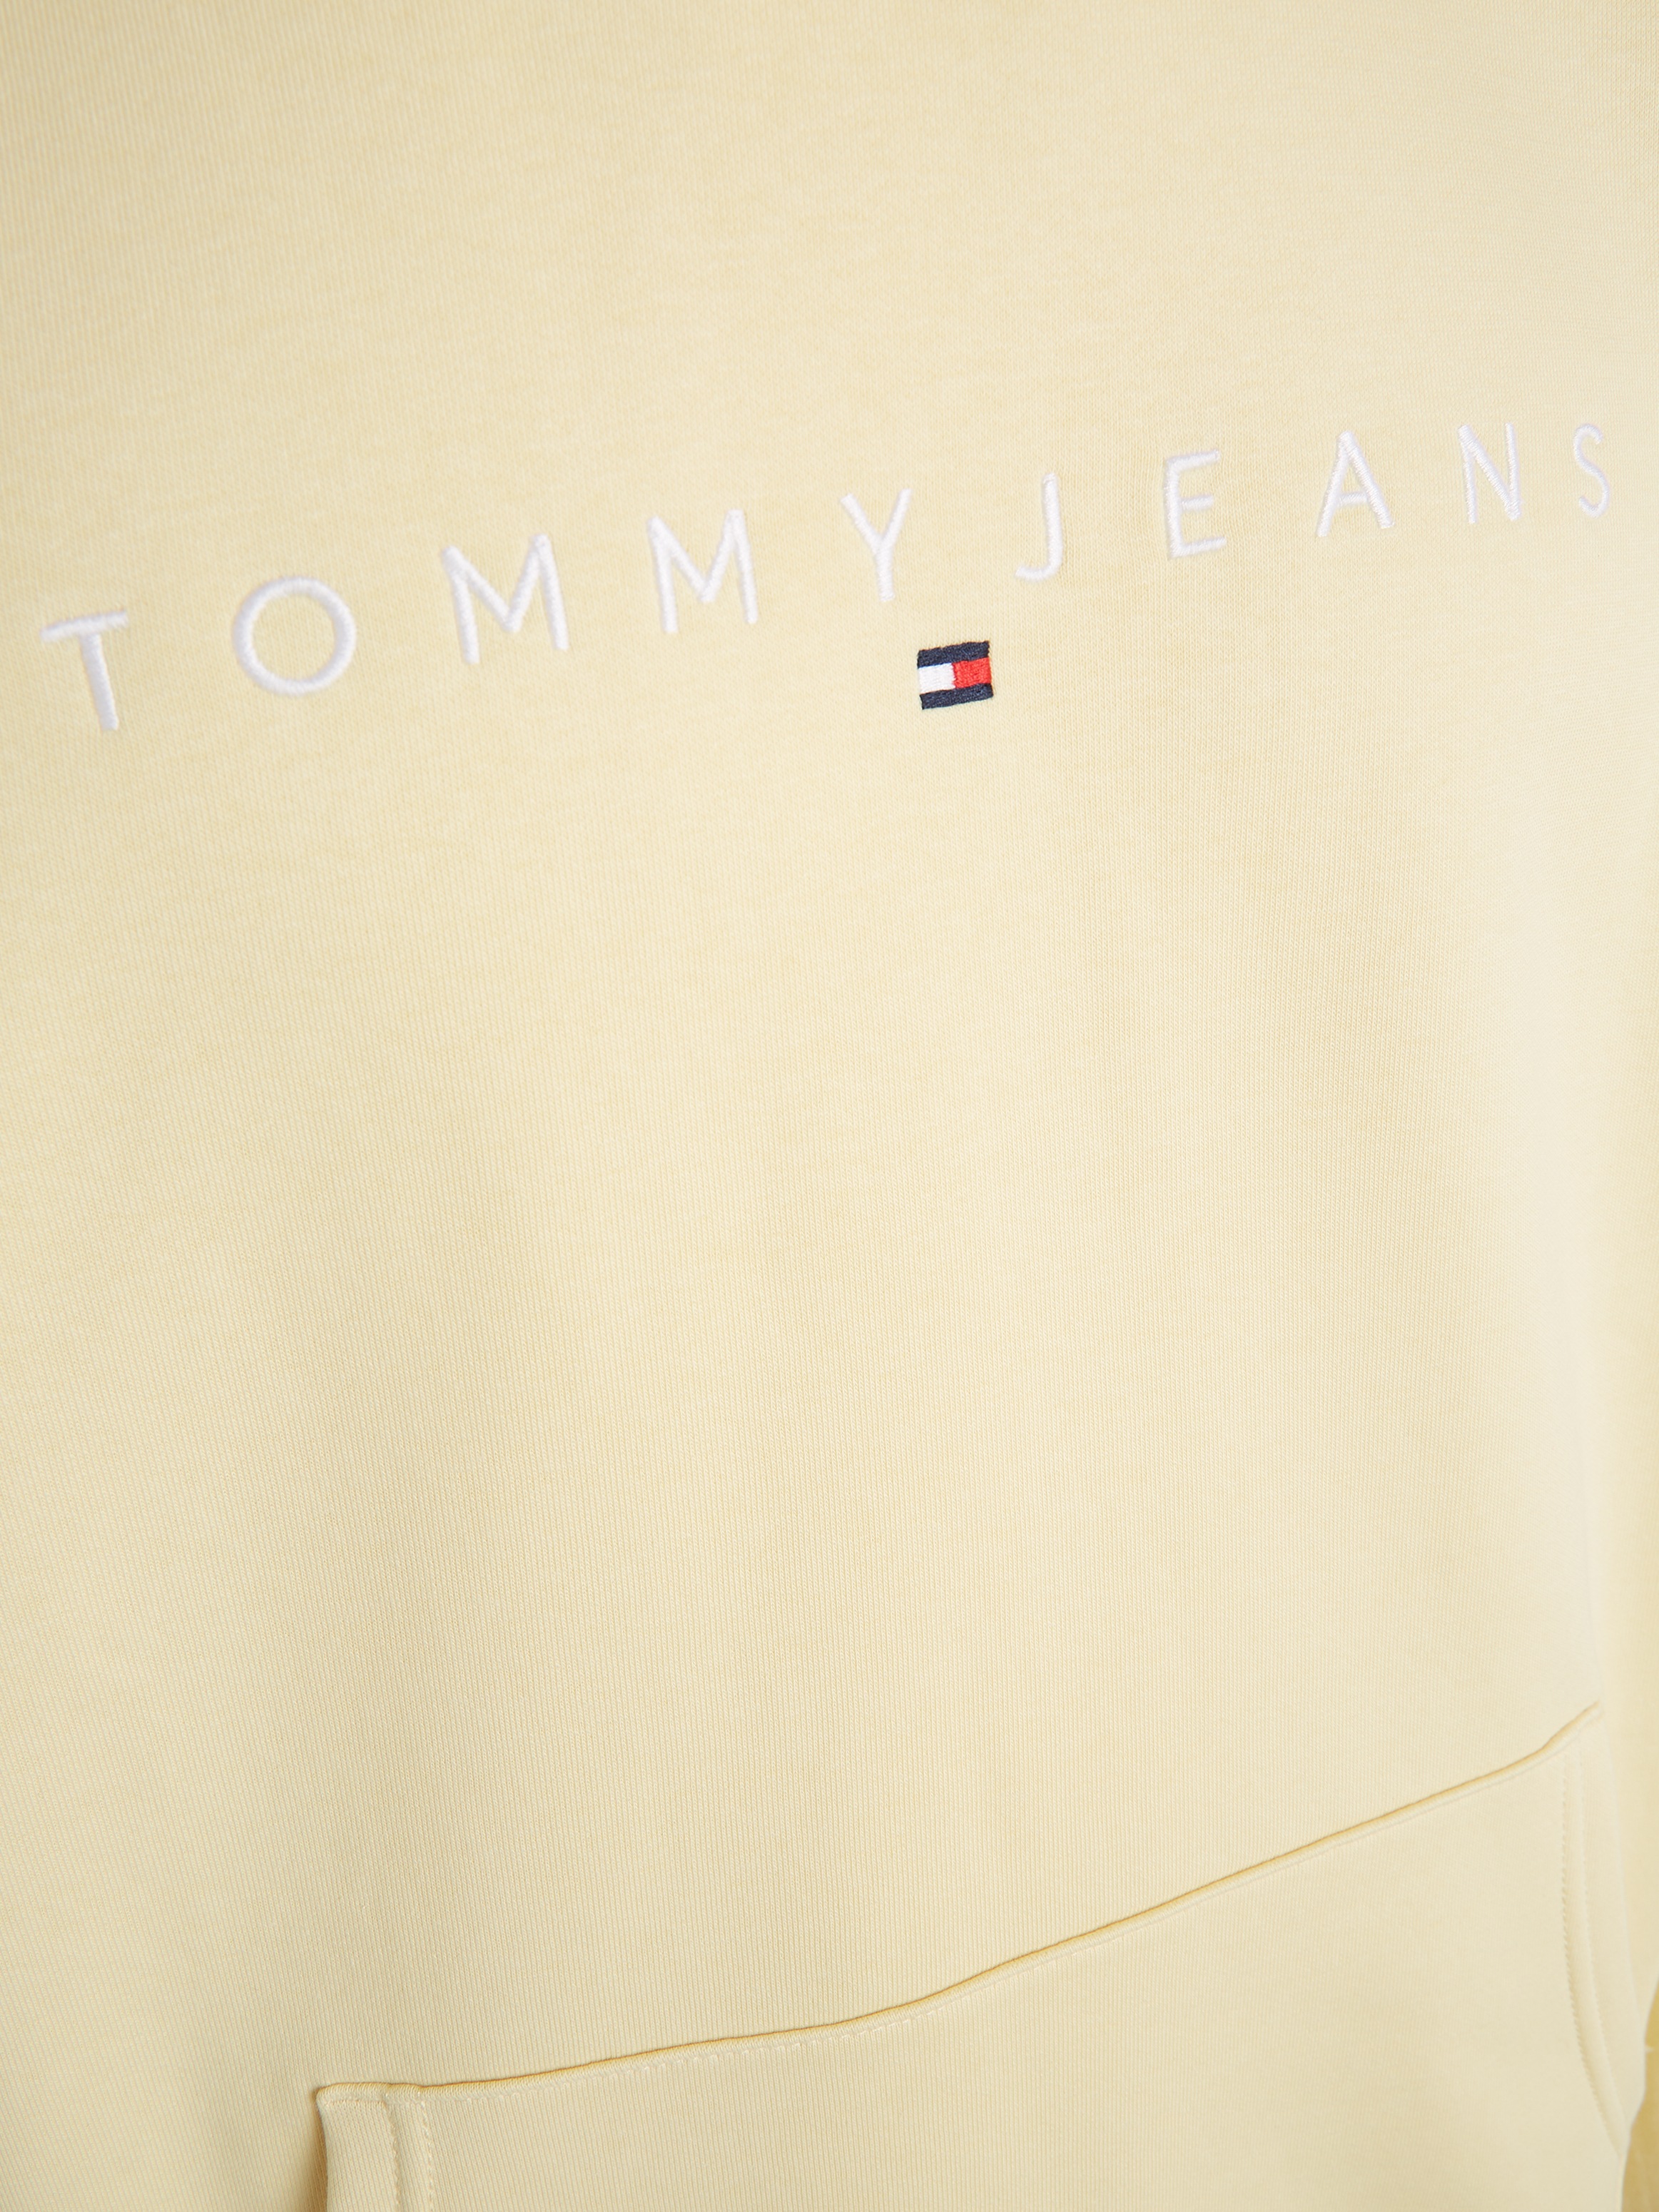 Tommy Jeans Kapuzensweatshirt »TJM REG LINEAR LOGO HOODIE EXT«, mit Kordel